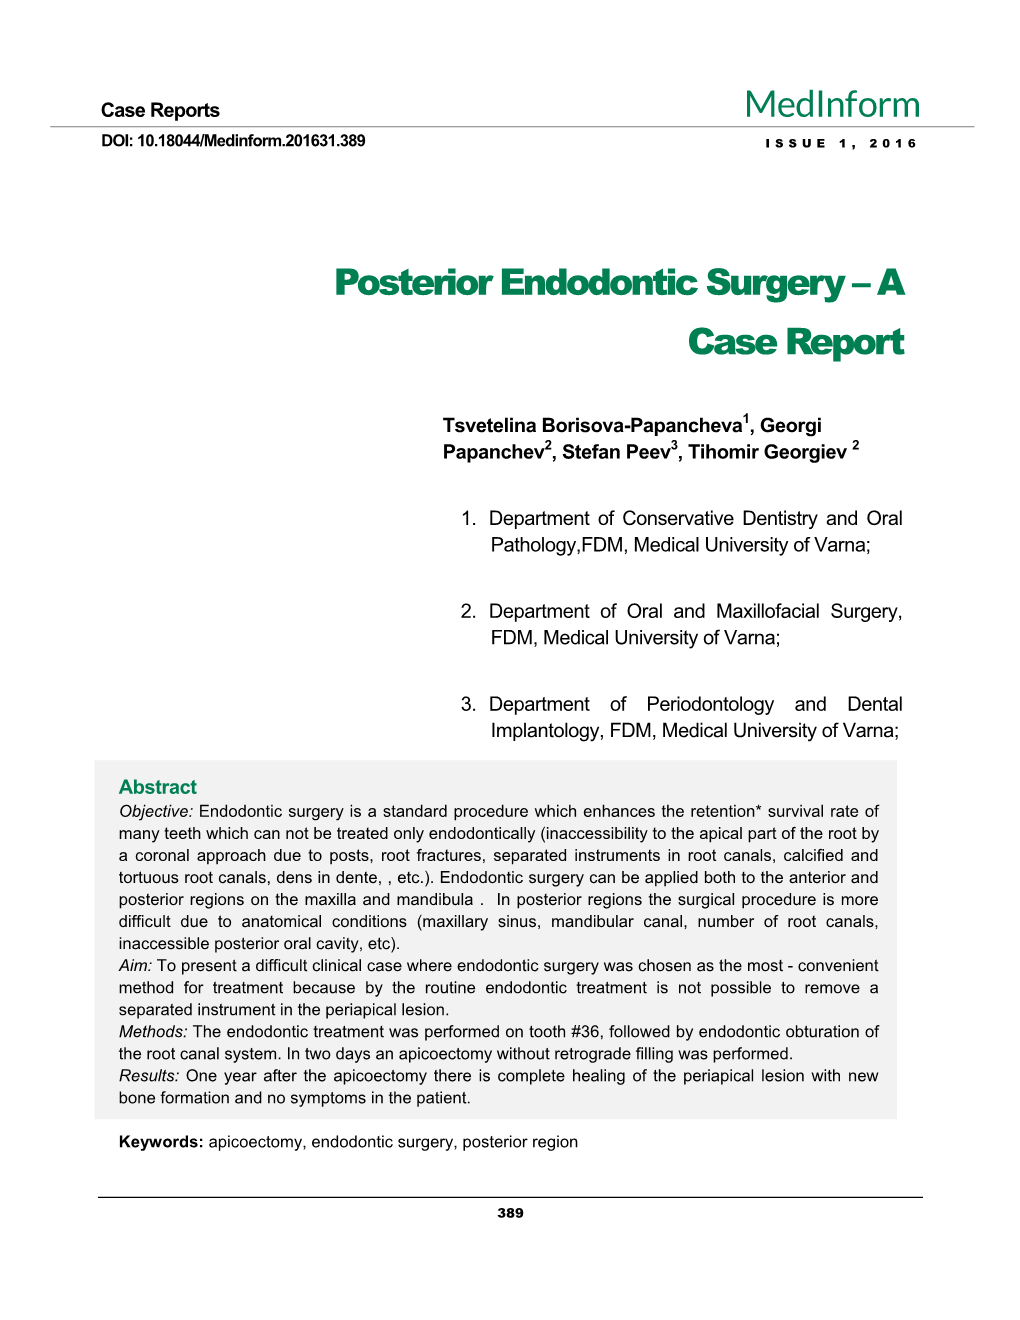 Posterior Endodontic Surgery – a Case Report